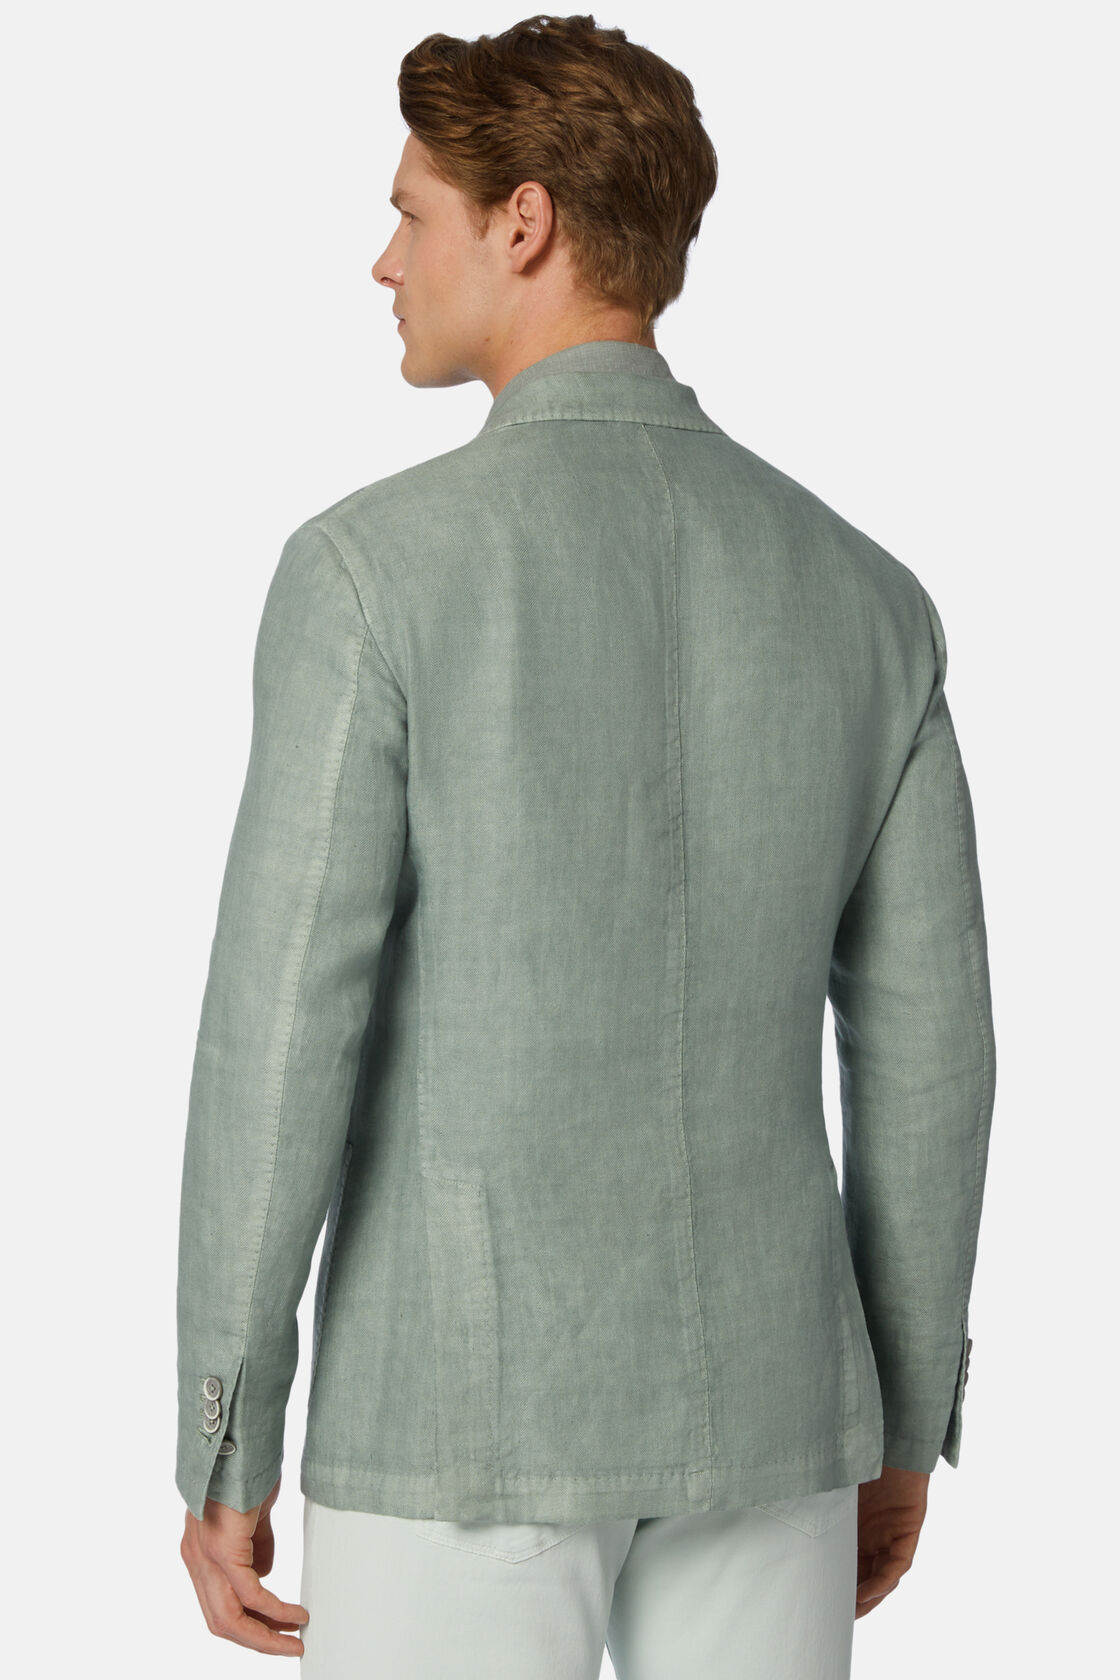 Green Herringbone Linen Jacket, Green, hi-res